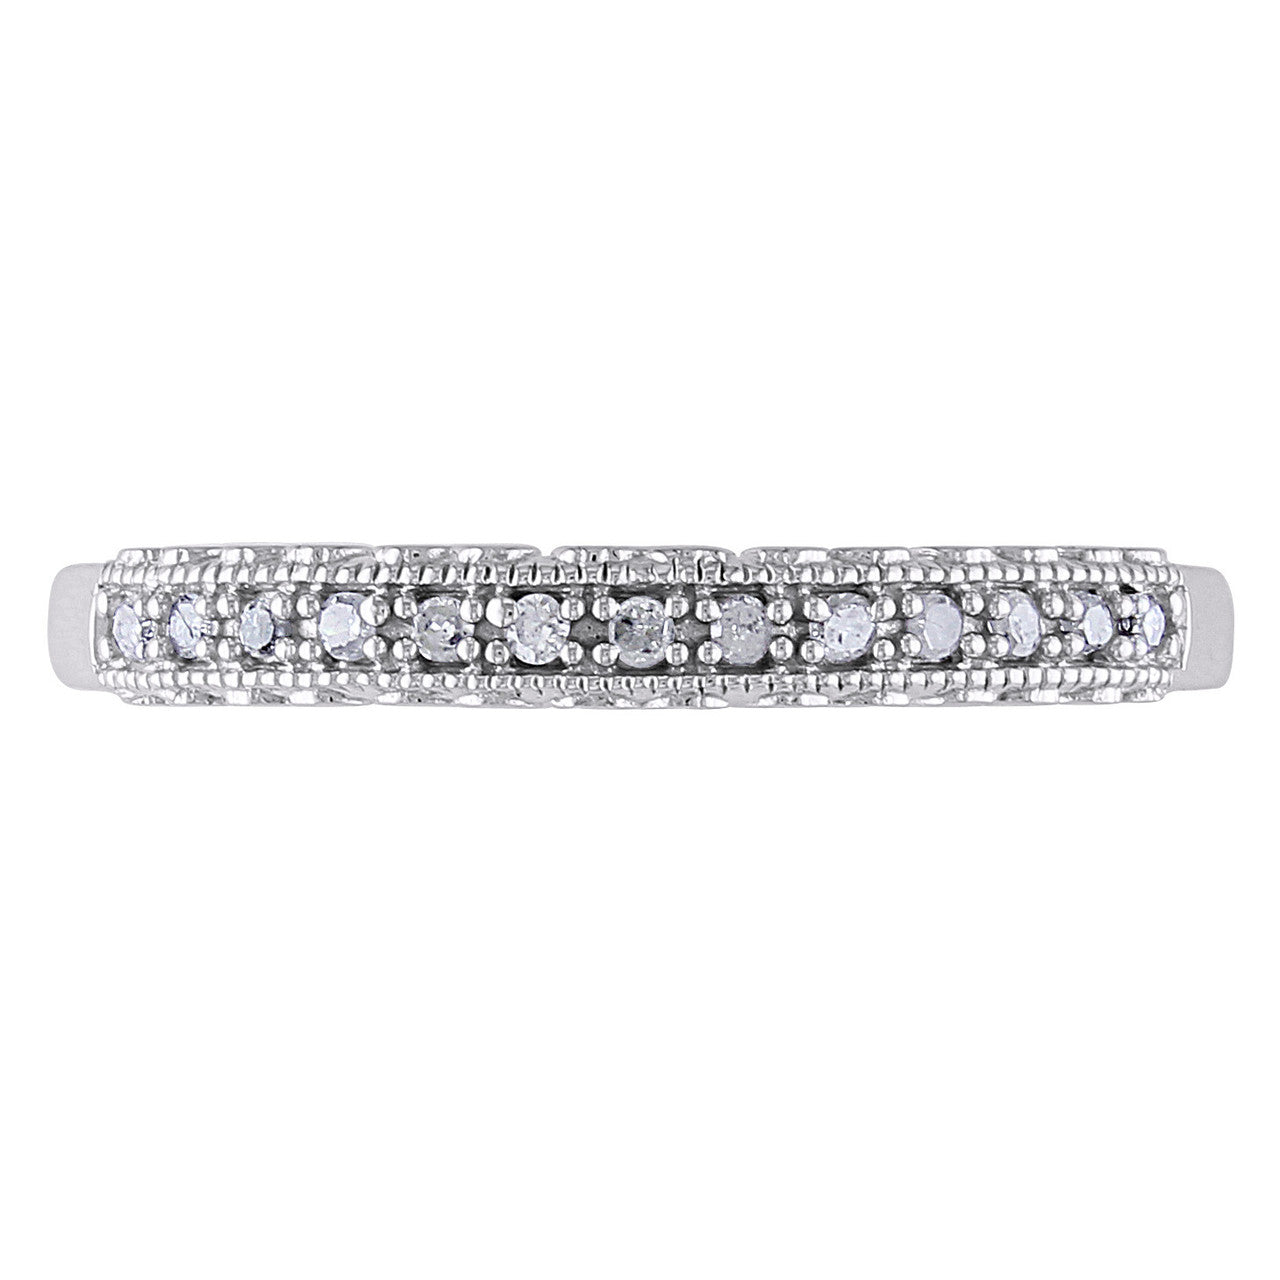 Ice Jewellery 0.08 Carat Diamond Ring in 10K White Gold - 7500081561 | Ice Jewellery Australia